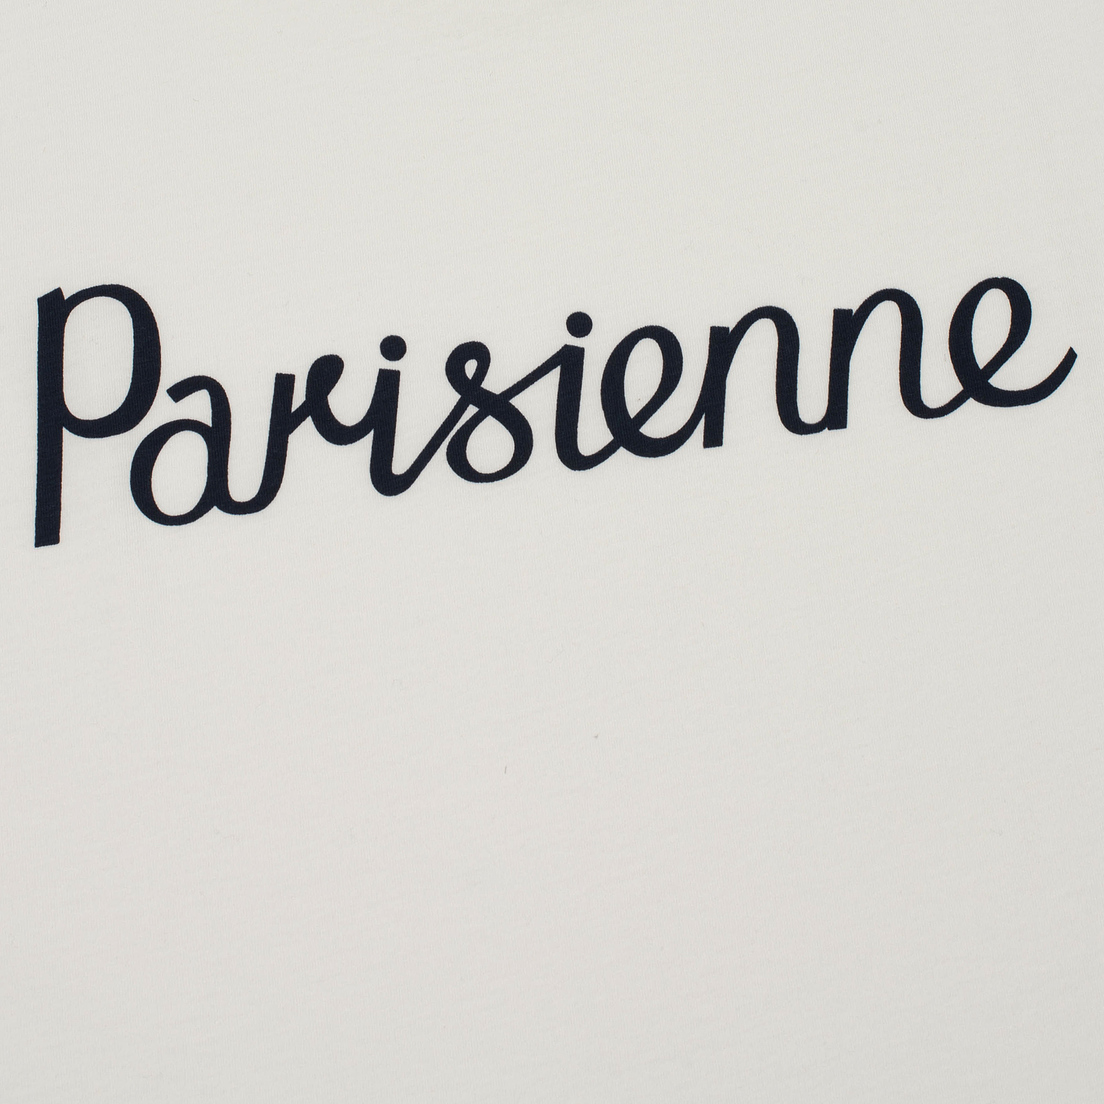 Maison Kitsune Женская футболка Parisienne